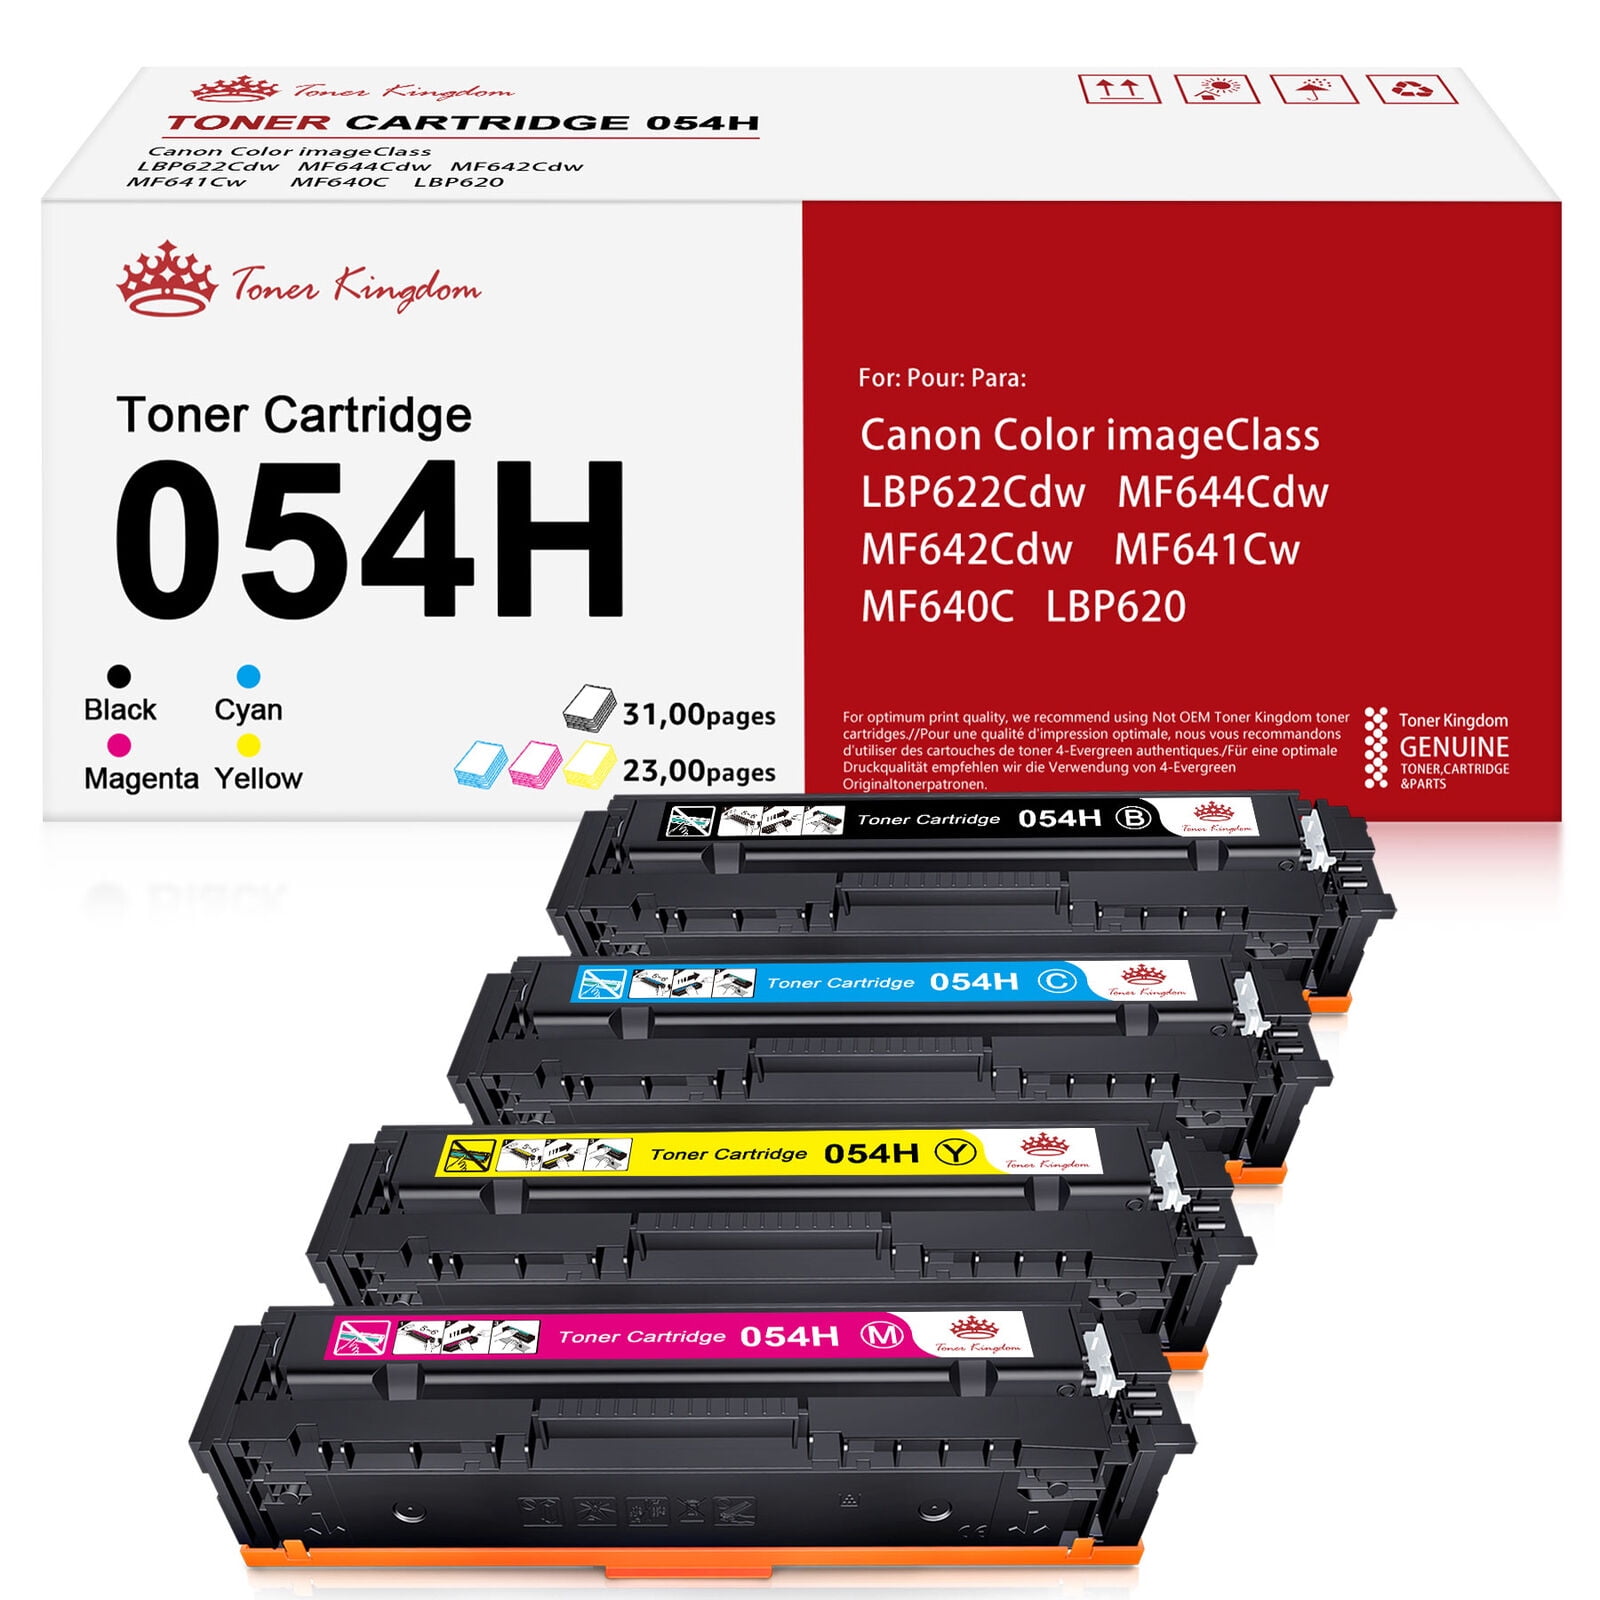 TRUE IMAGE Compatible Toner Cartridge for Canon 054H CRG-054H Color ImageCLASS MF641Cw MF642Cdw MF644Cdw MF640C LBP622Cdw Printer Ink (2*Black, Cyan, Magenta, 5-Pack) - Walmart.com